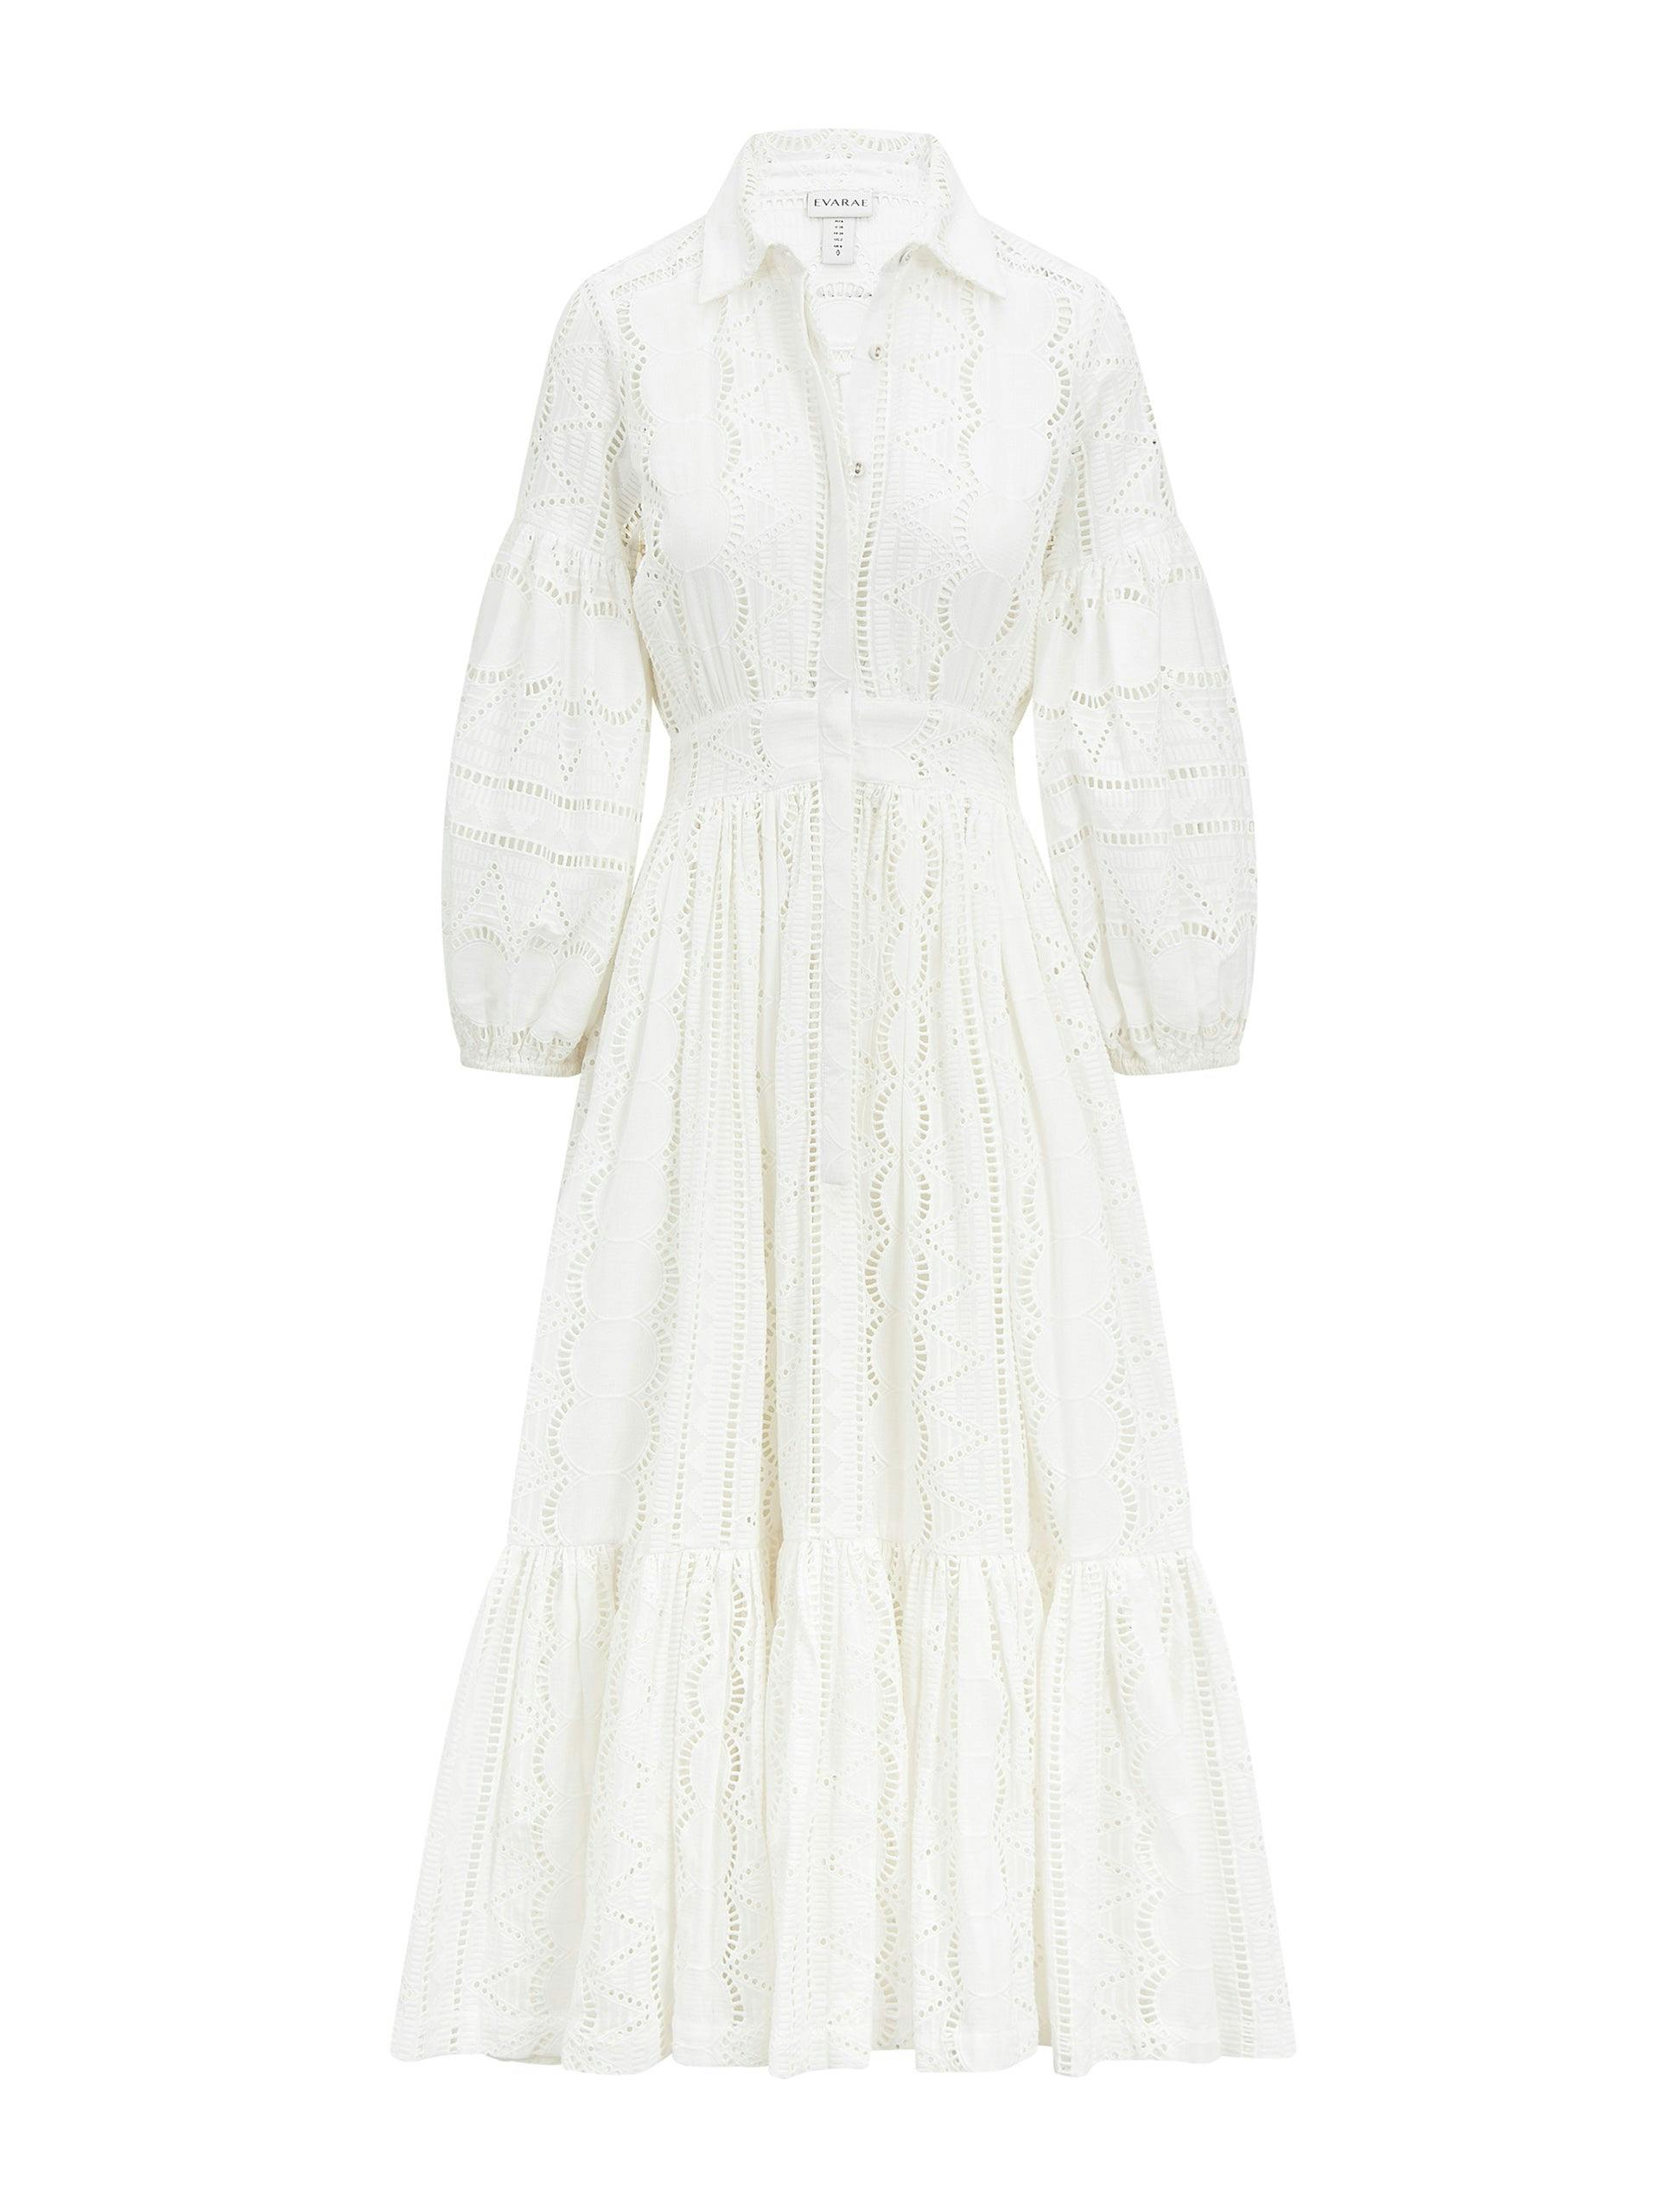 Embroidered white Sienna dress